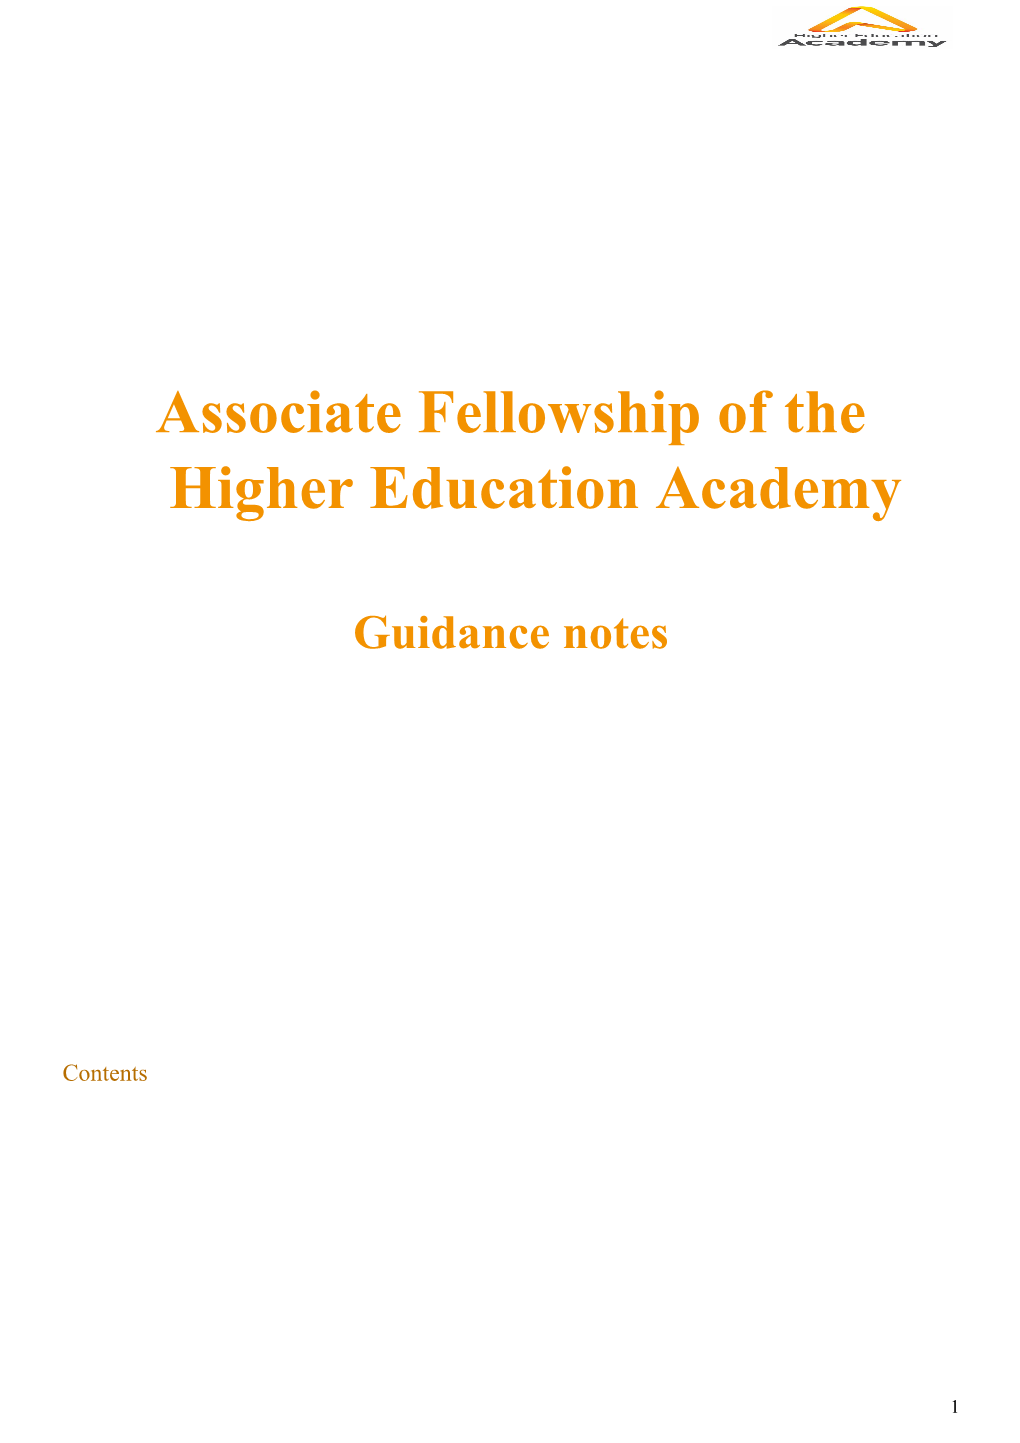 Associate Fellowship of the Higher Education Academy